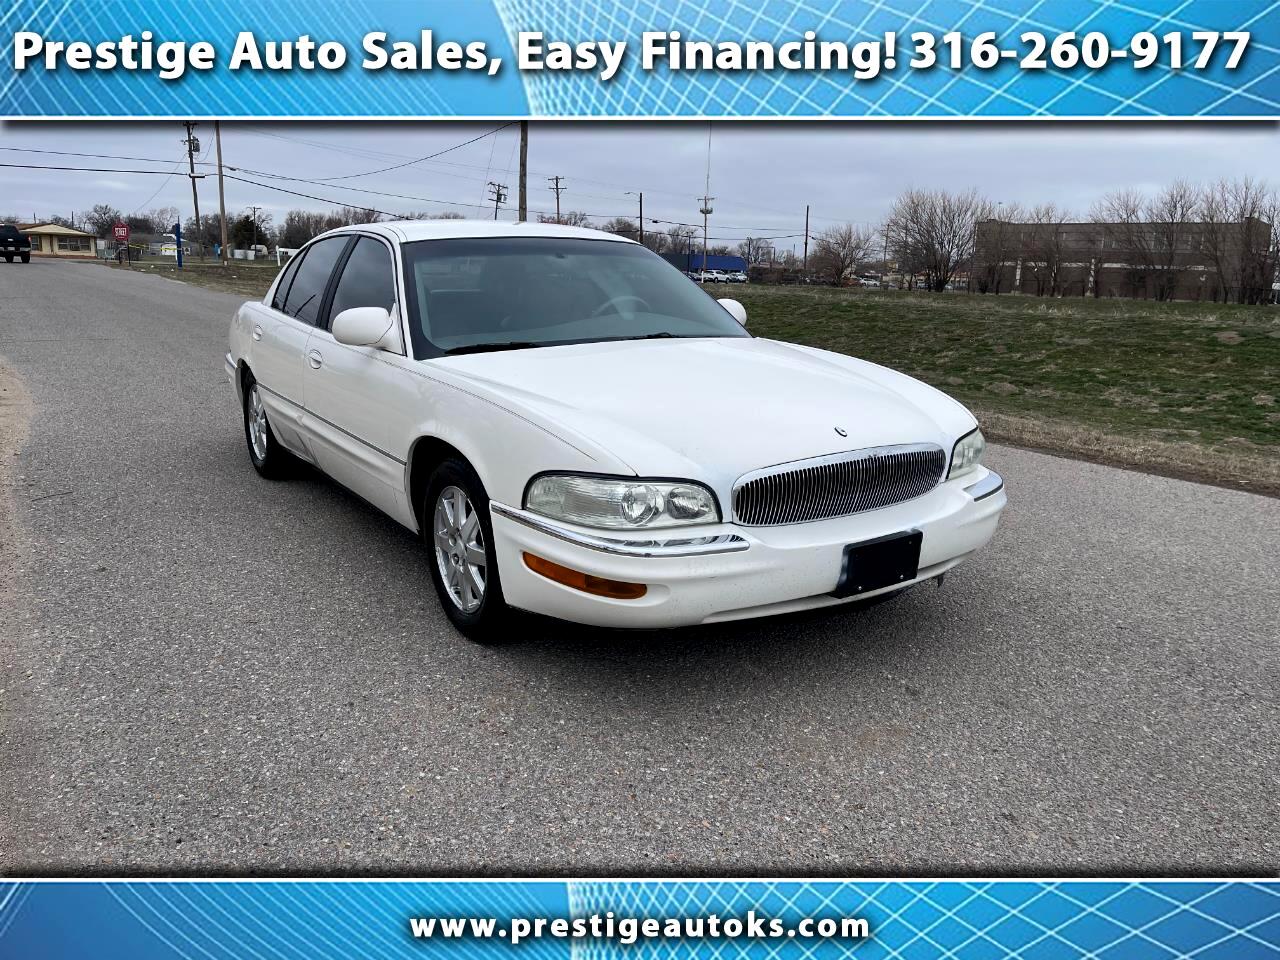 Used 2004 Buick Park Avenue Sedan for Sale in Wichita KS 67060 Prestige  Auto Sales